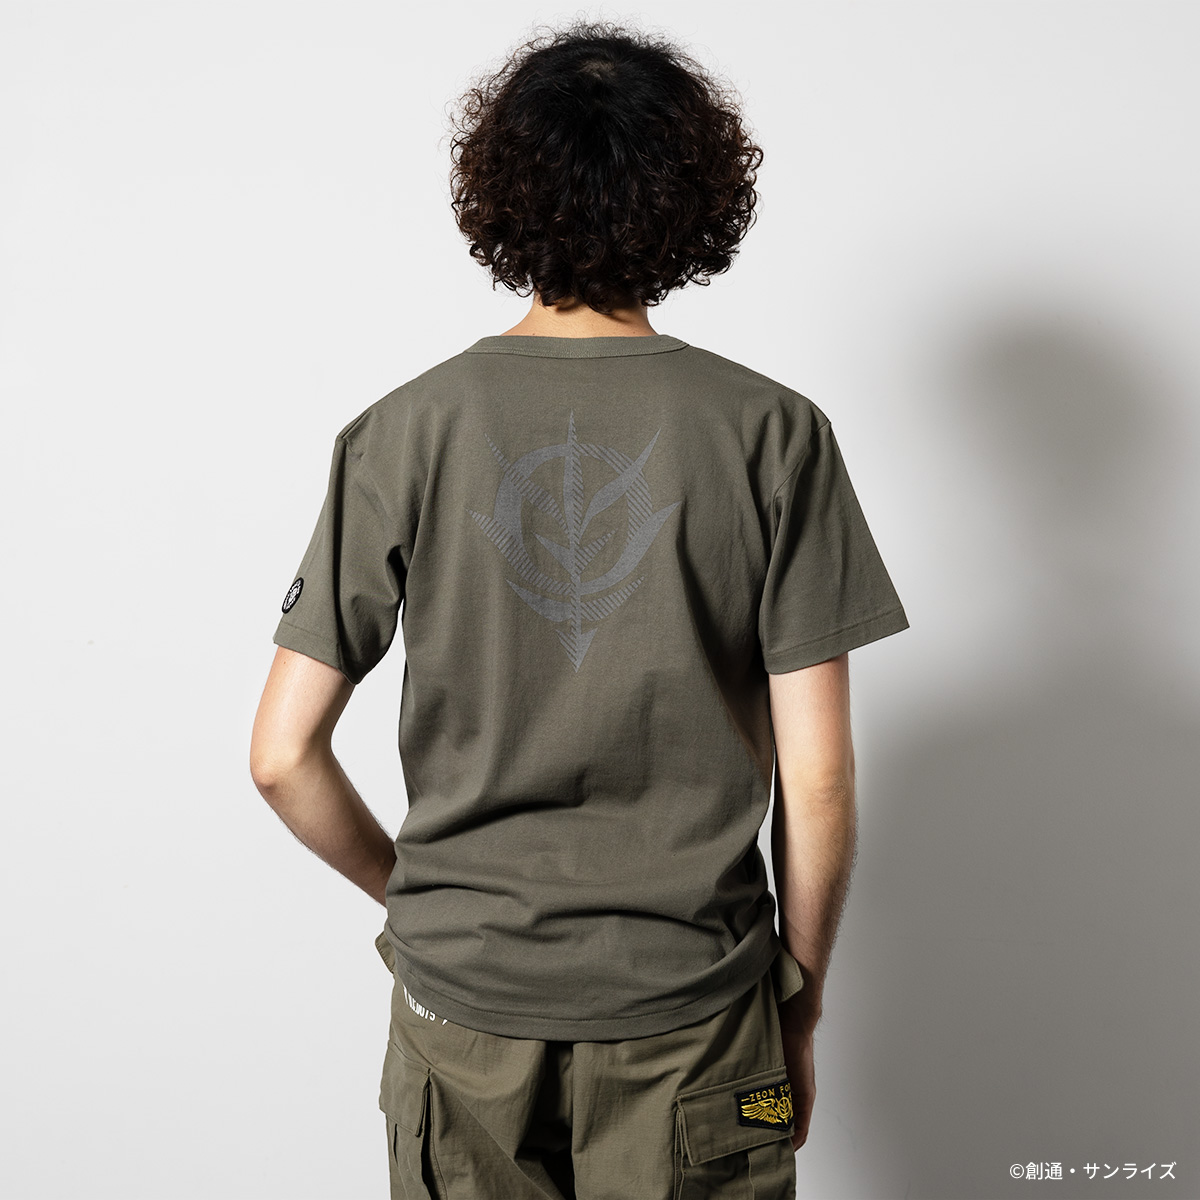 STRICT-G.ARMS『機動戦士ガンダム』ヘンリーネック半袖Tシャツ リフレクタープリント ZEON FORCES